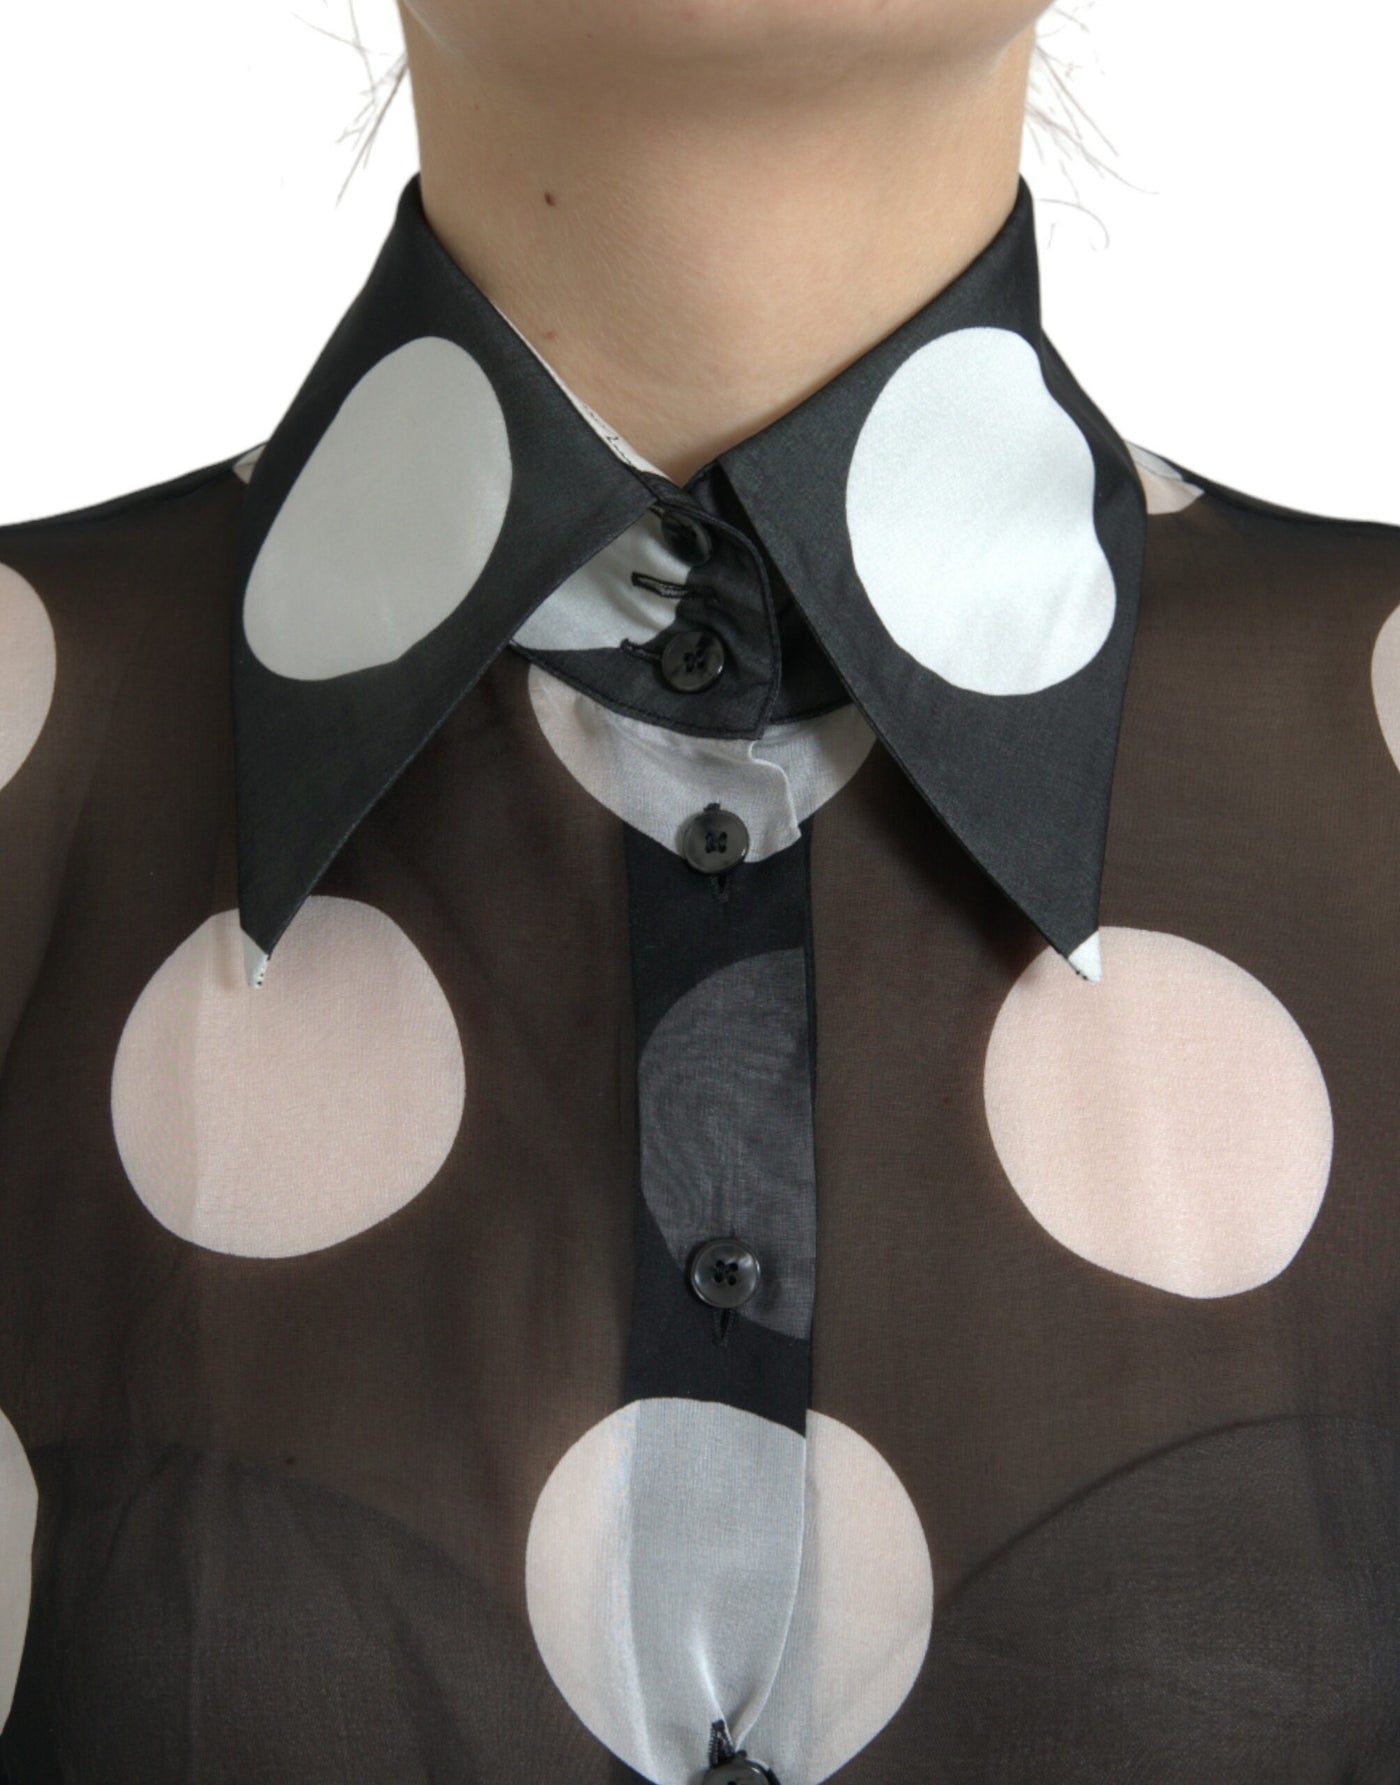 Dolce & Gabbana Silk Collared Button-Up Blouse in Black & White